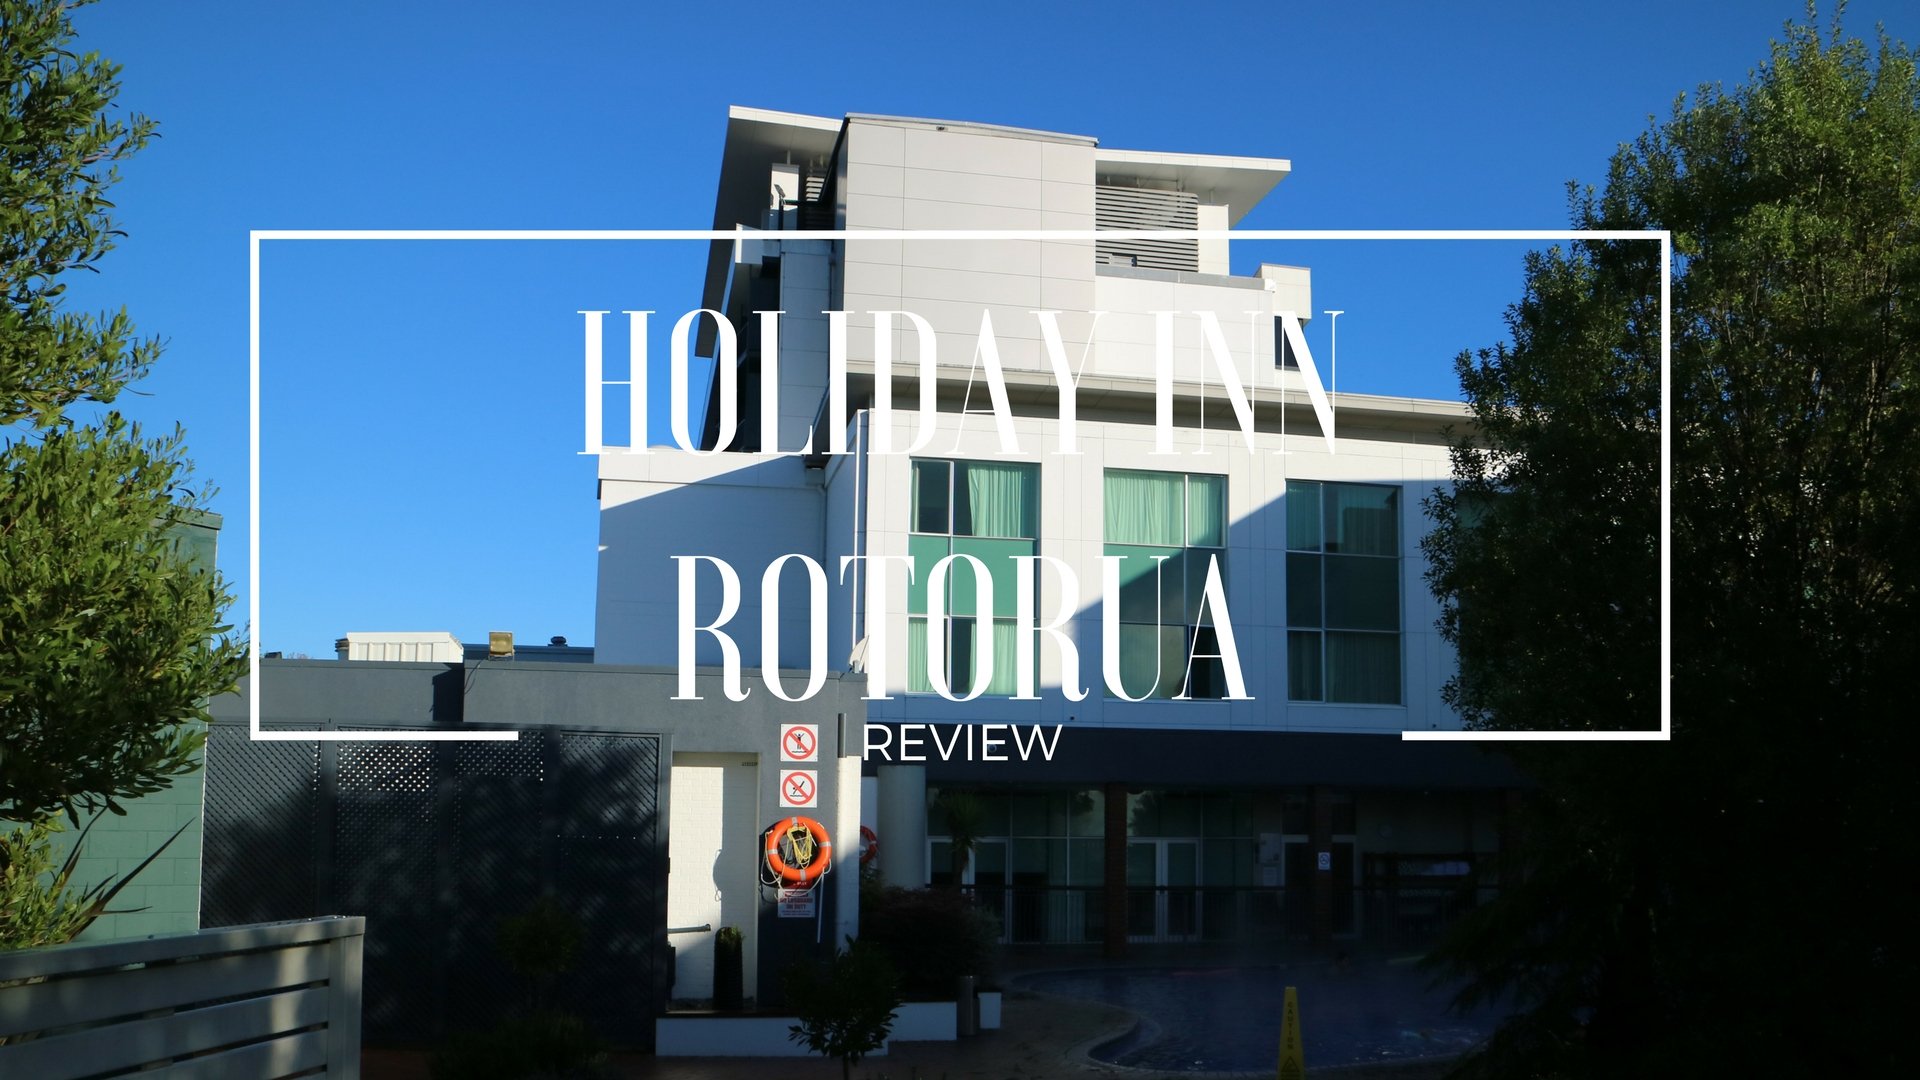 Holiday Inn Rotorua Review